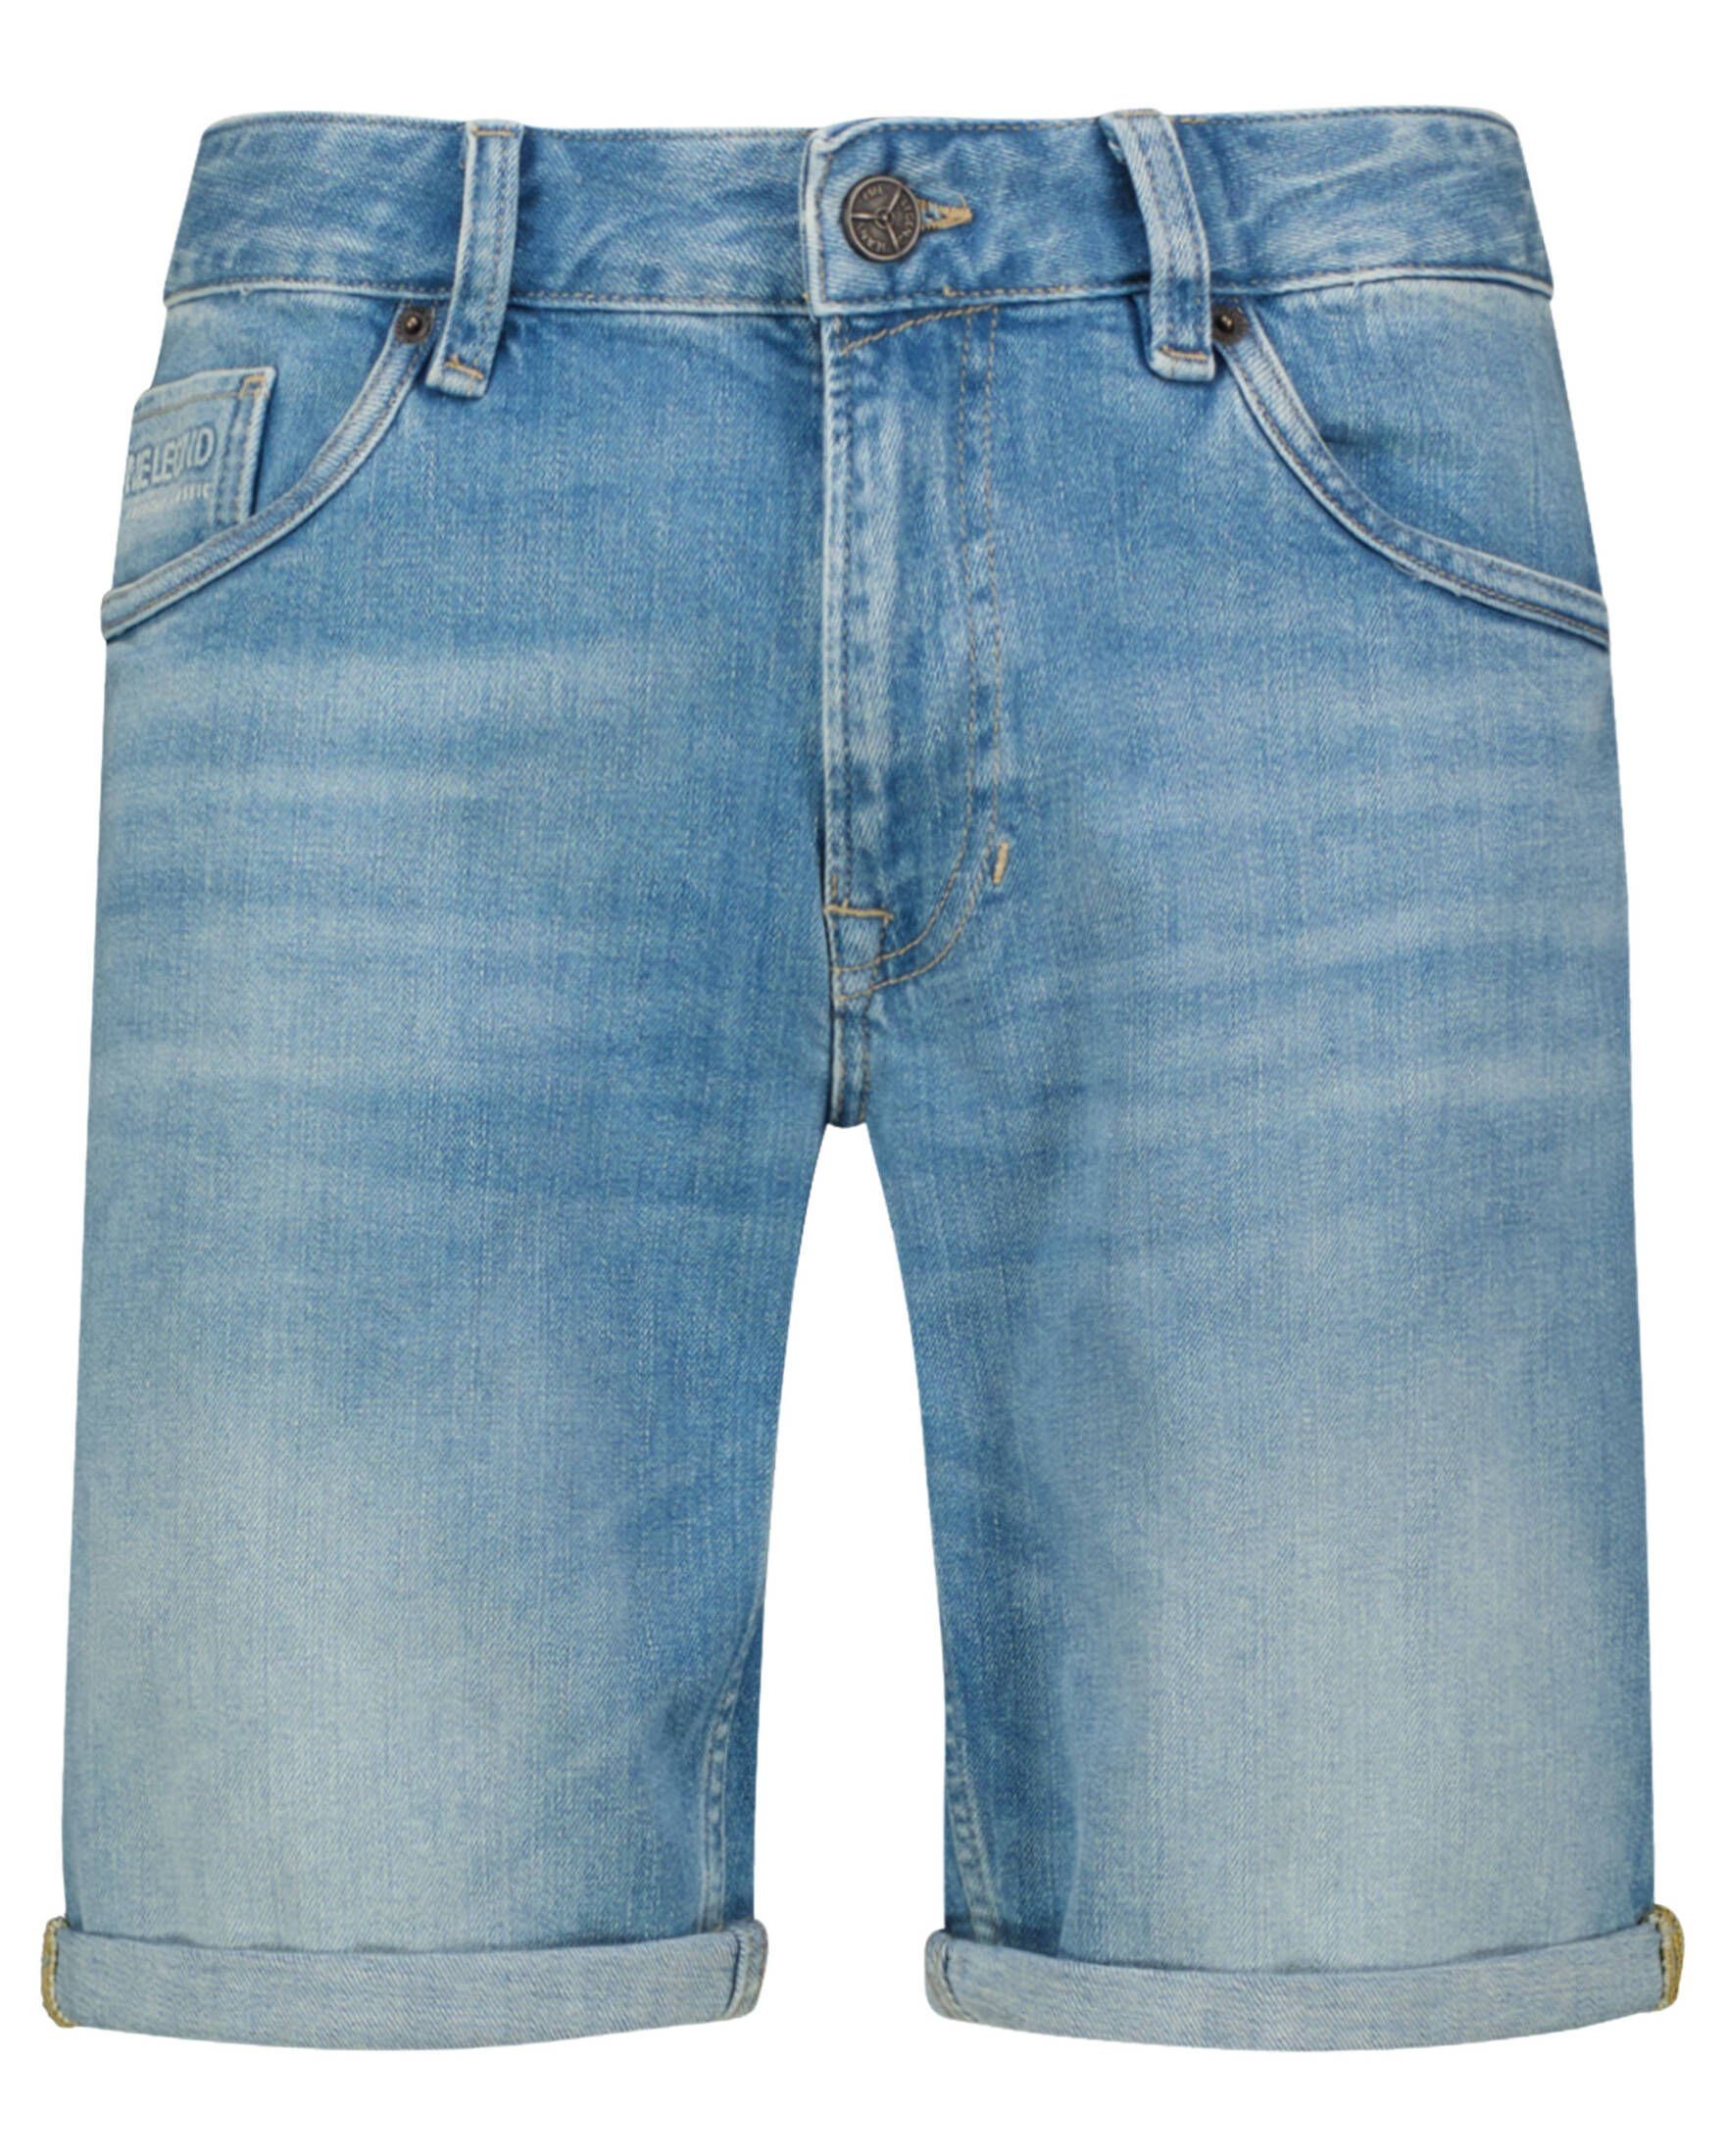 PME LEGEND Jeansshorts Herren Jeanshorts Regular NIGHTFLIGHT bleached Fit (80)